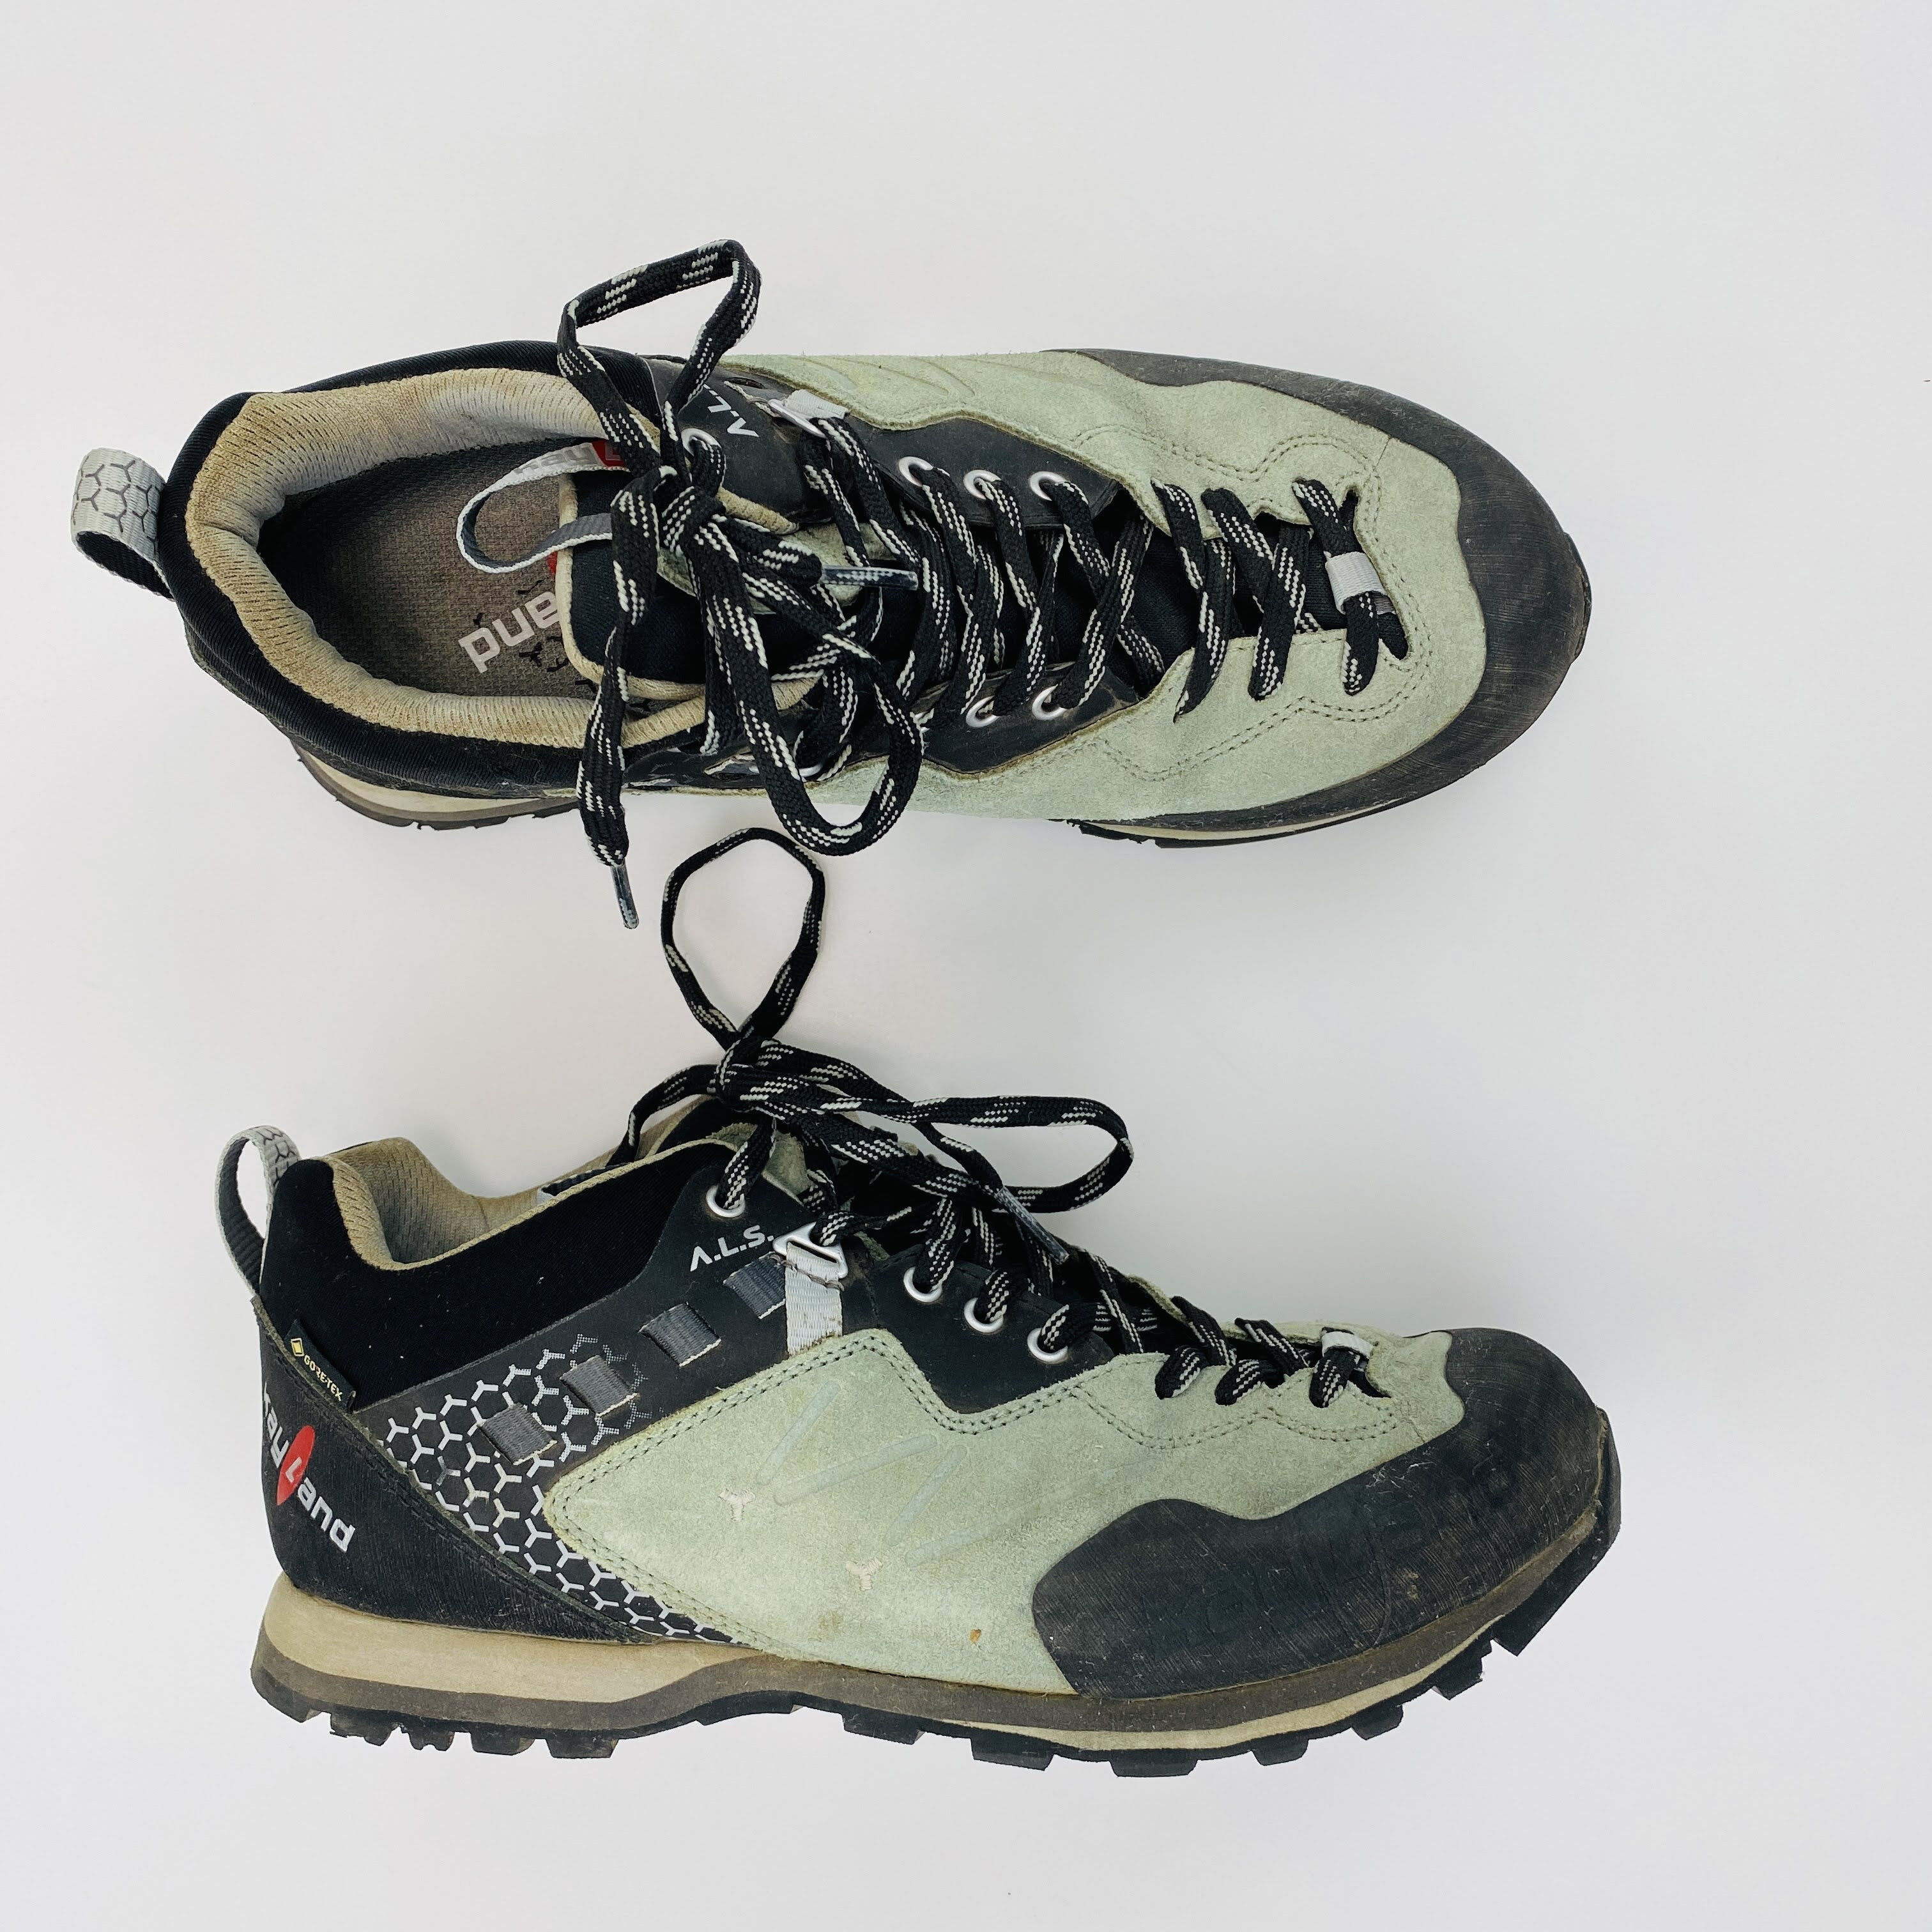 Kayland Revolt Gtx - Scarpe da trekking di seconda mano - Uomo - Grigio - 40.5 | Hardloop